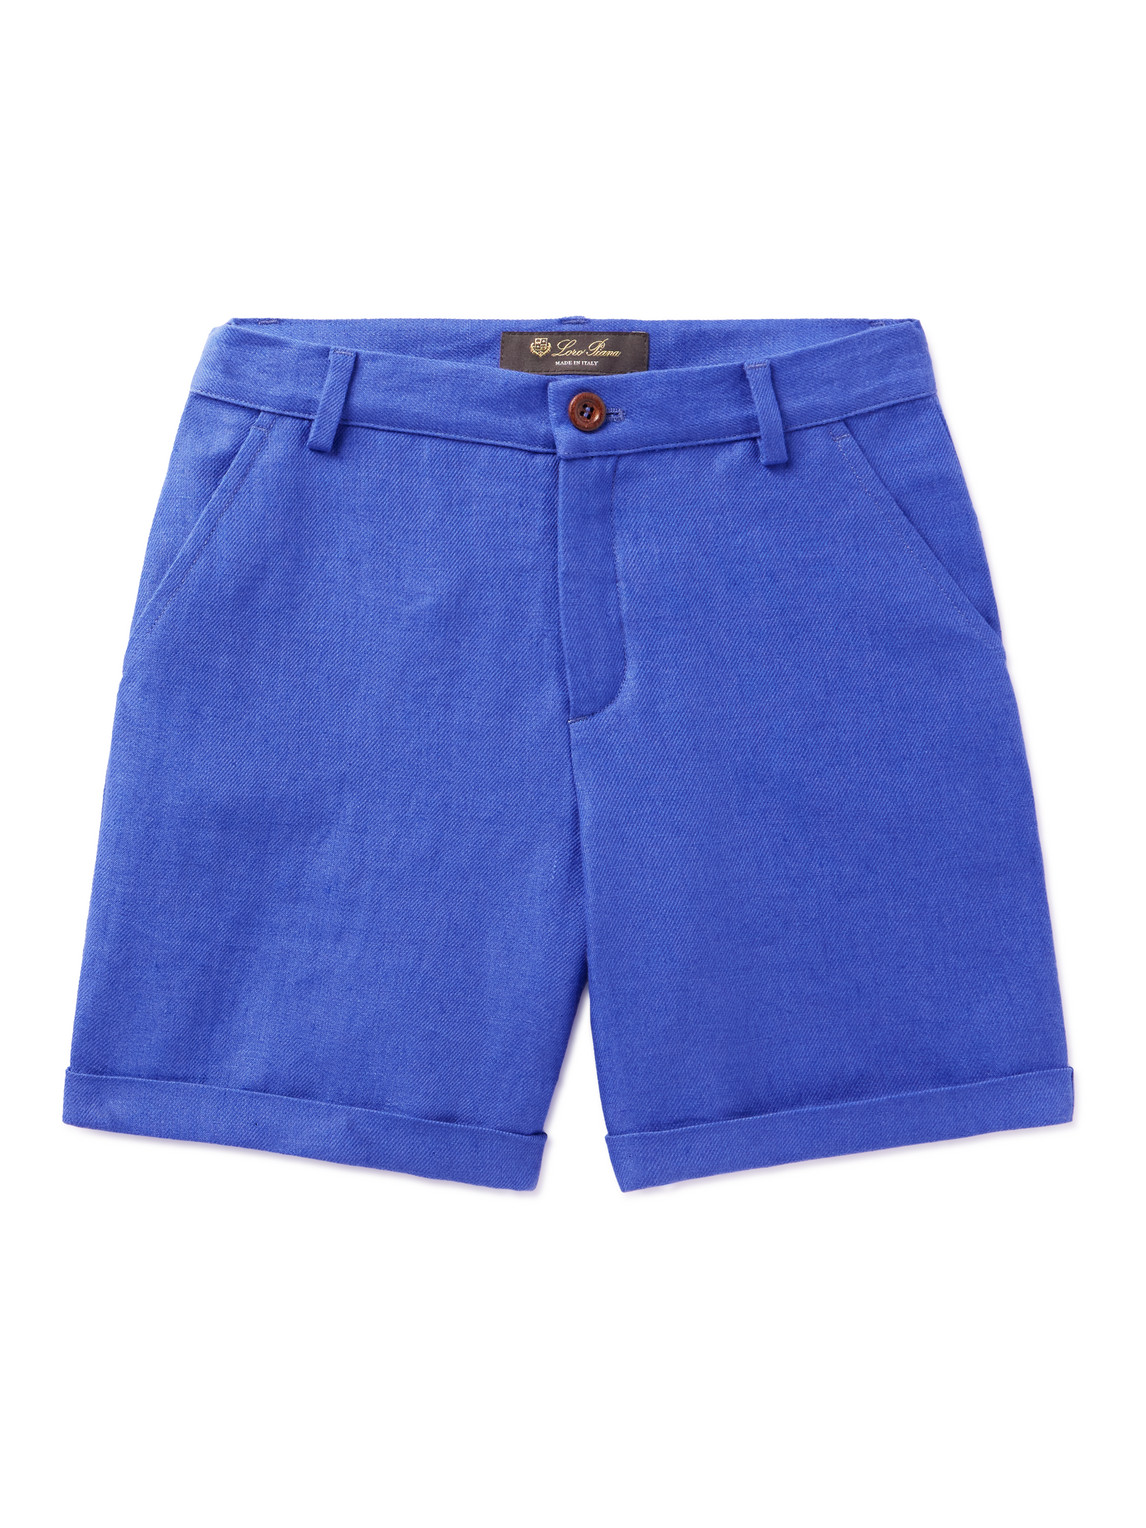 Loro Piana Kids - Nevin Antigua Linen Bermuda Shorts - Men - Blue - Age 4 von Loro Piana Kids